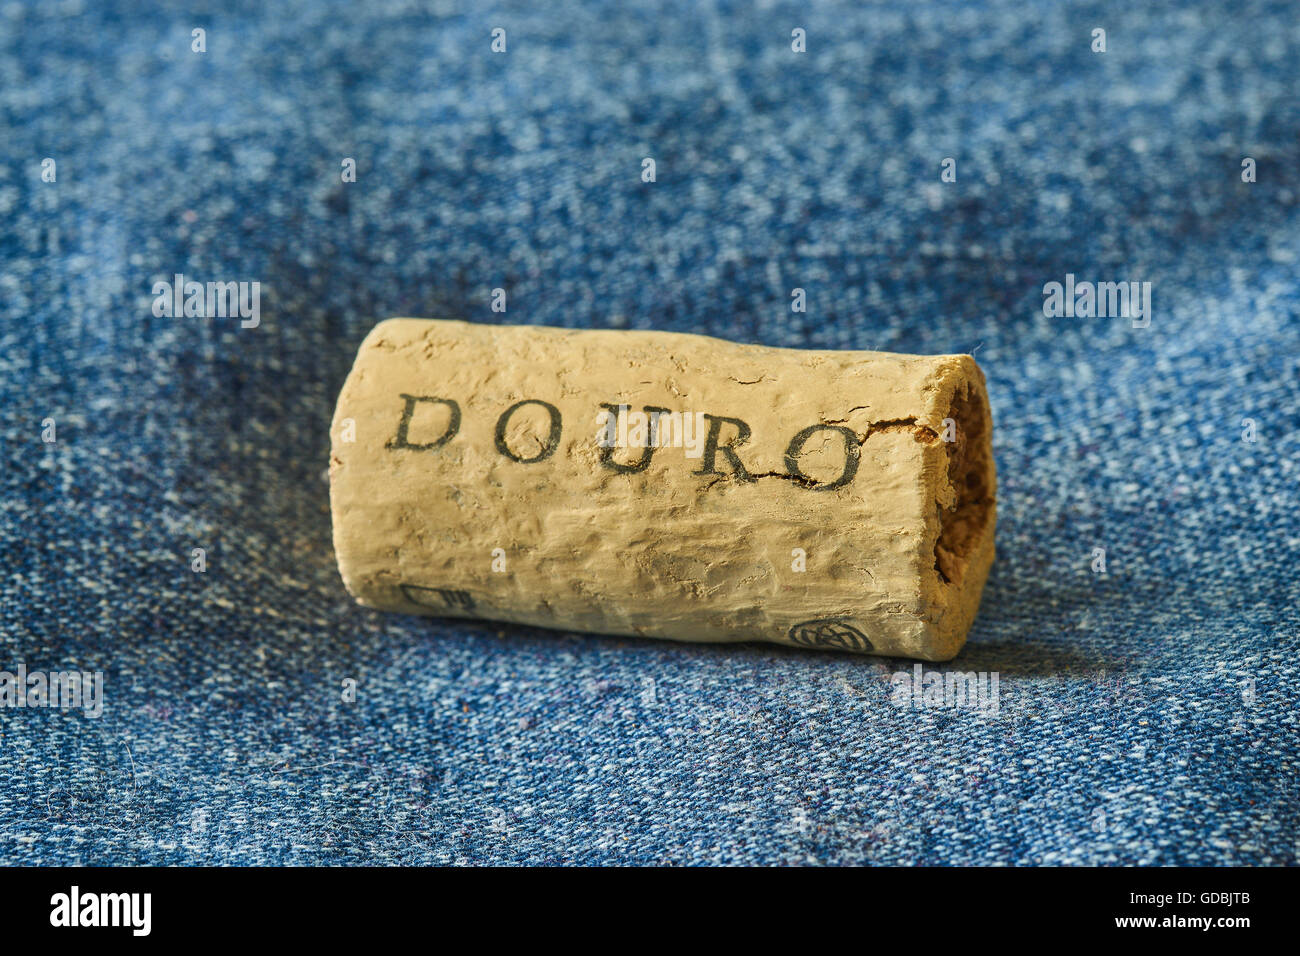 Duorum Portugese wine cork stopper Stock Photo